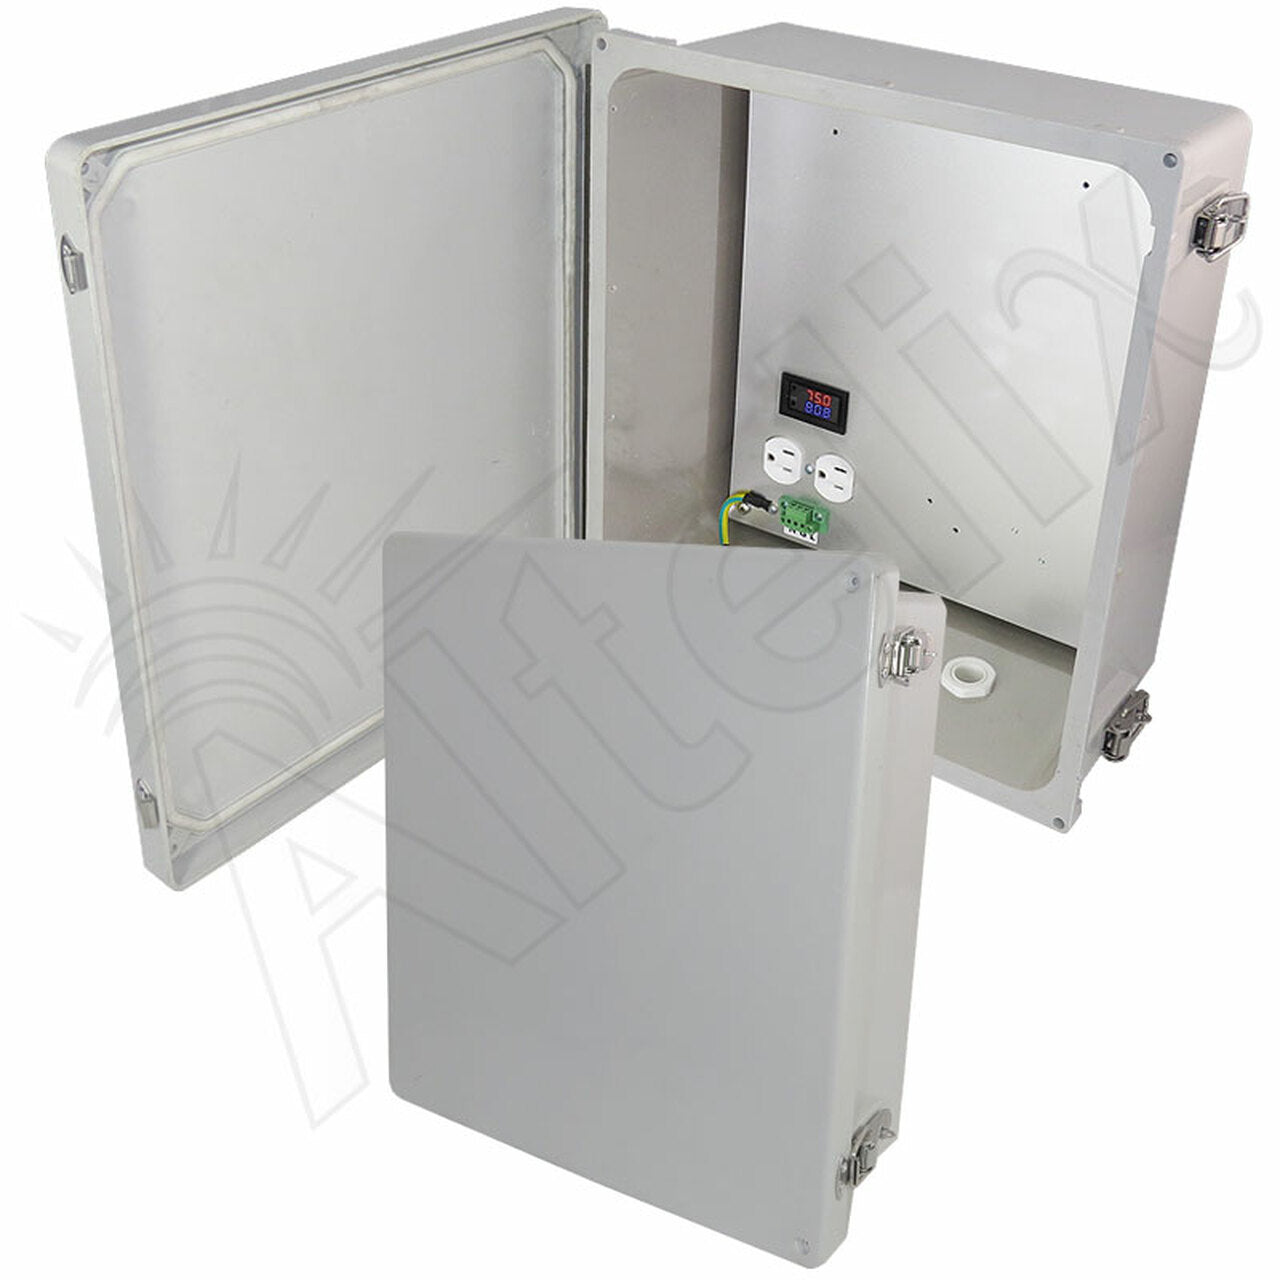 Altelix Fiberglass Weatherproof Heated NEMA Enclosure with 120 VAC Outlets & 200W Heater with Digital Temperature Controller